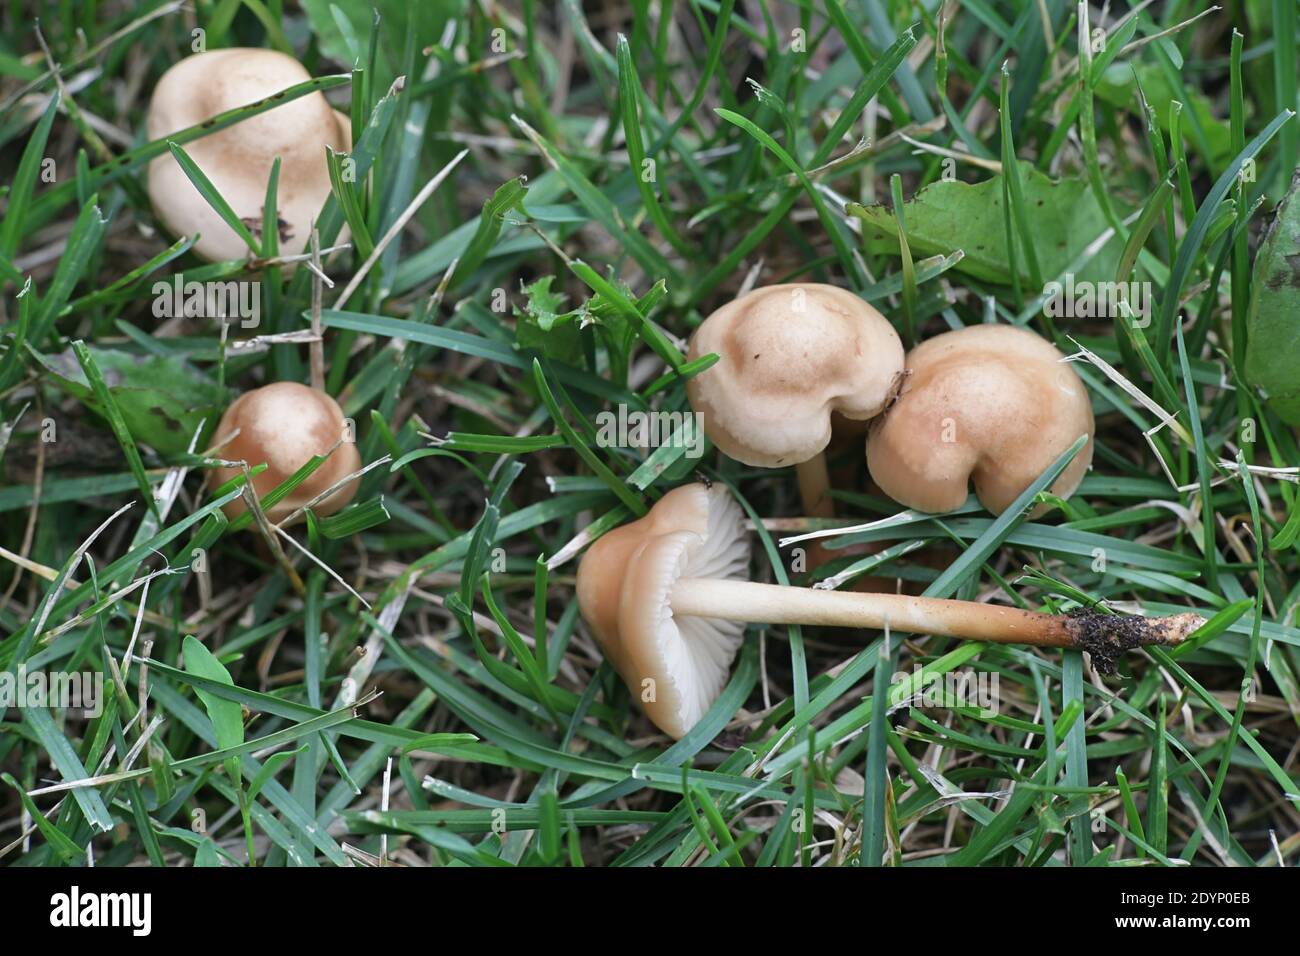 Marasmius oreades, known as the Scotch bonnet, fairy ring mushroom or fairy ring champignon, wild edible mushroom from Finland Stock Photo